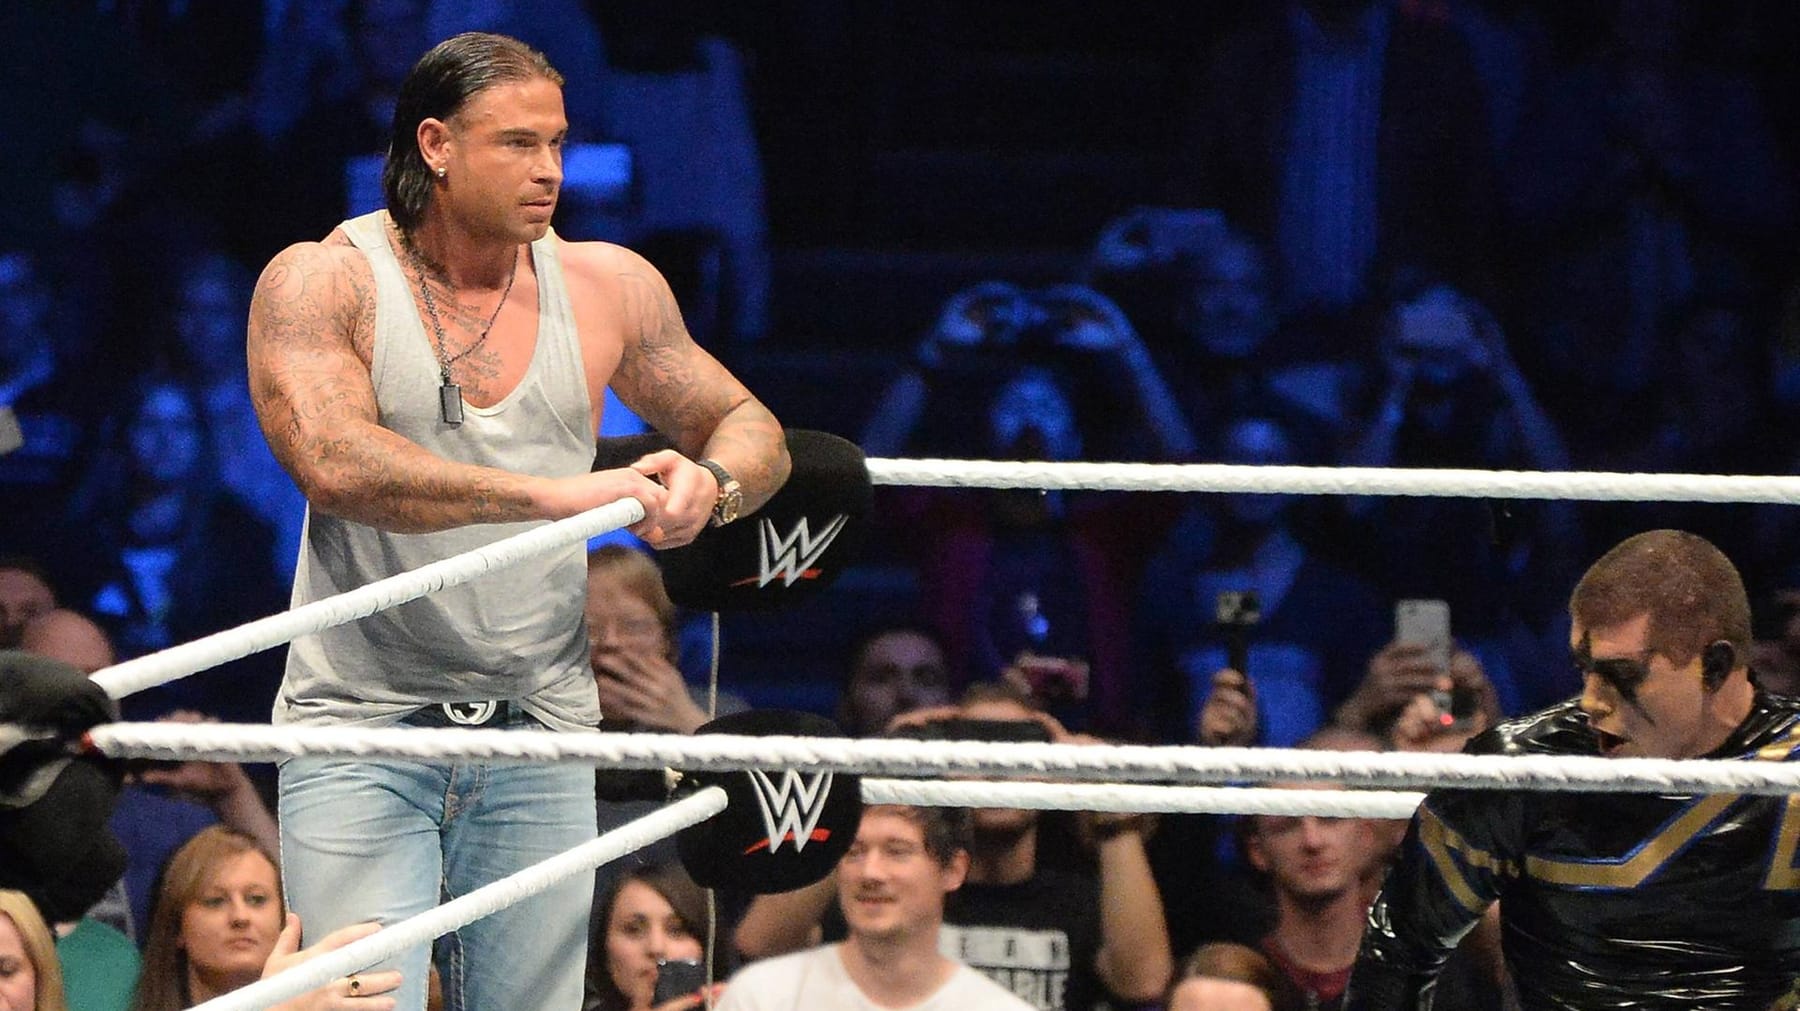 Besiddelse Mappe krøllet Tim Wiese in der WWE: Termin für Wrestling-Debüt steht